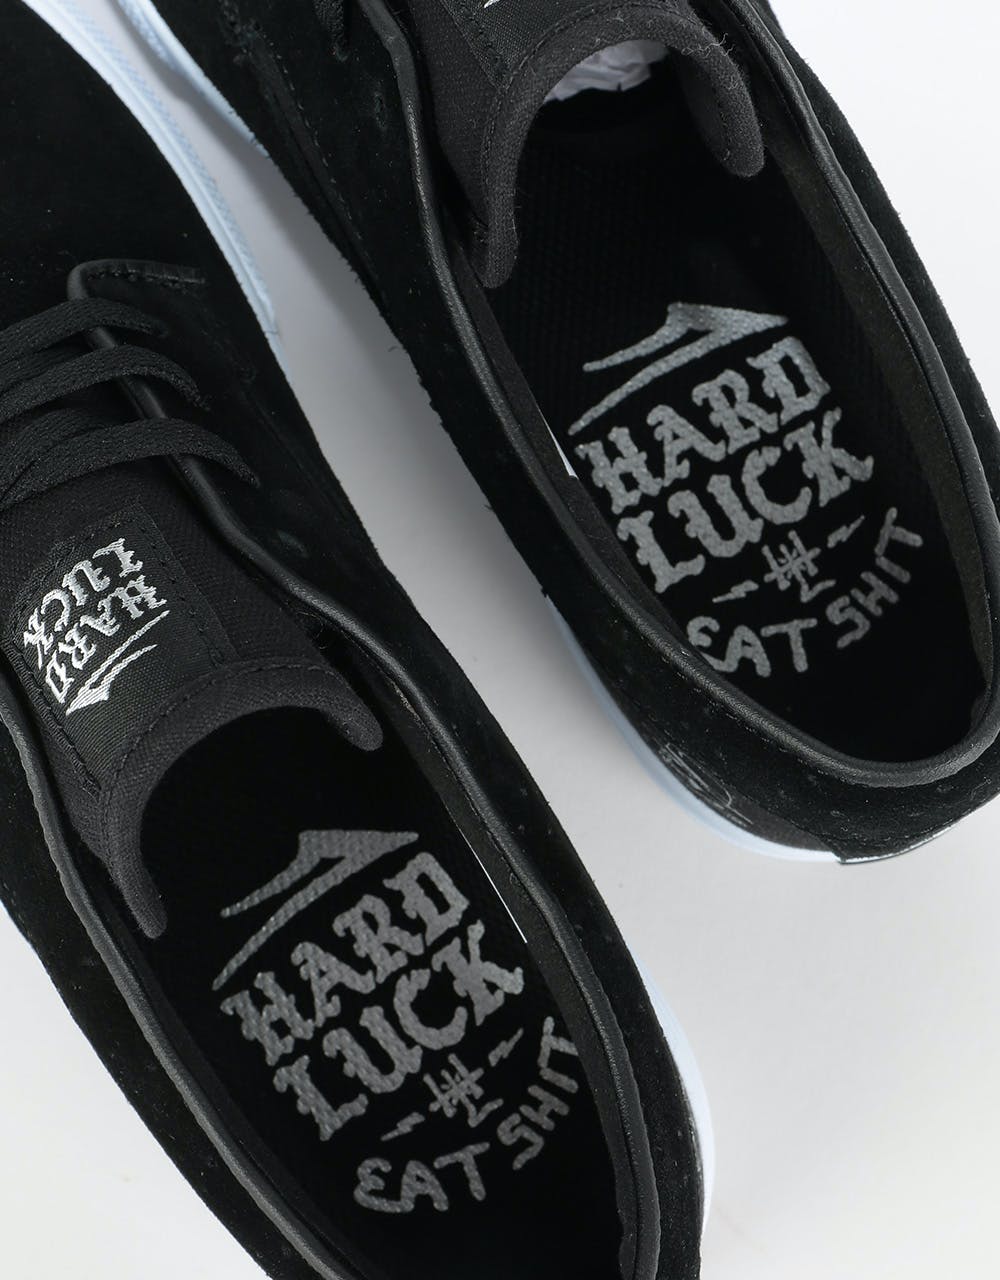 Lakai x Hard Luck Riley Hawk Skate Shoes - Black Suede